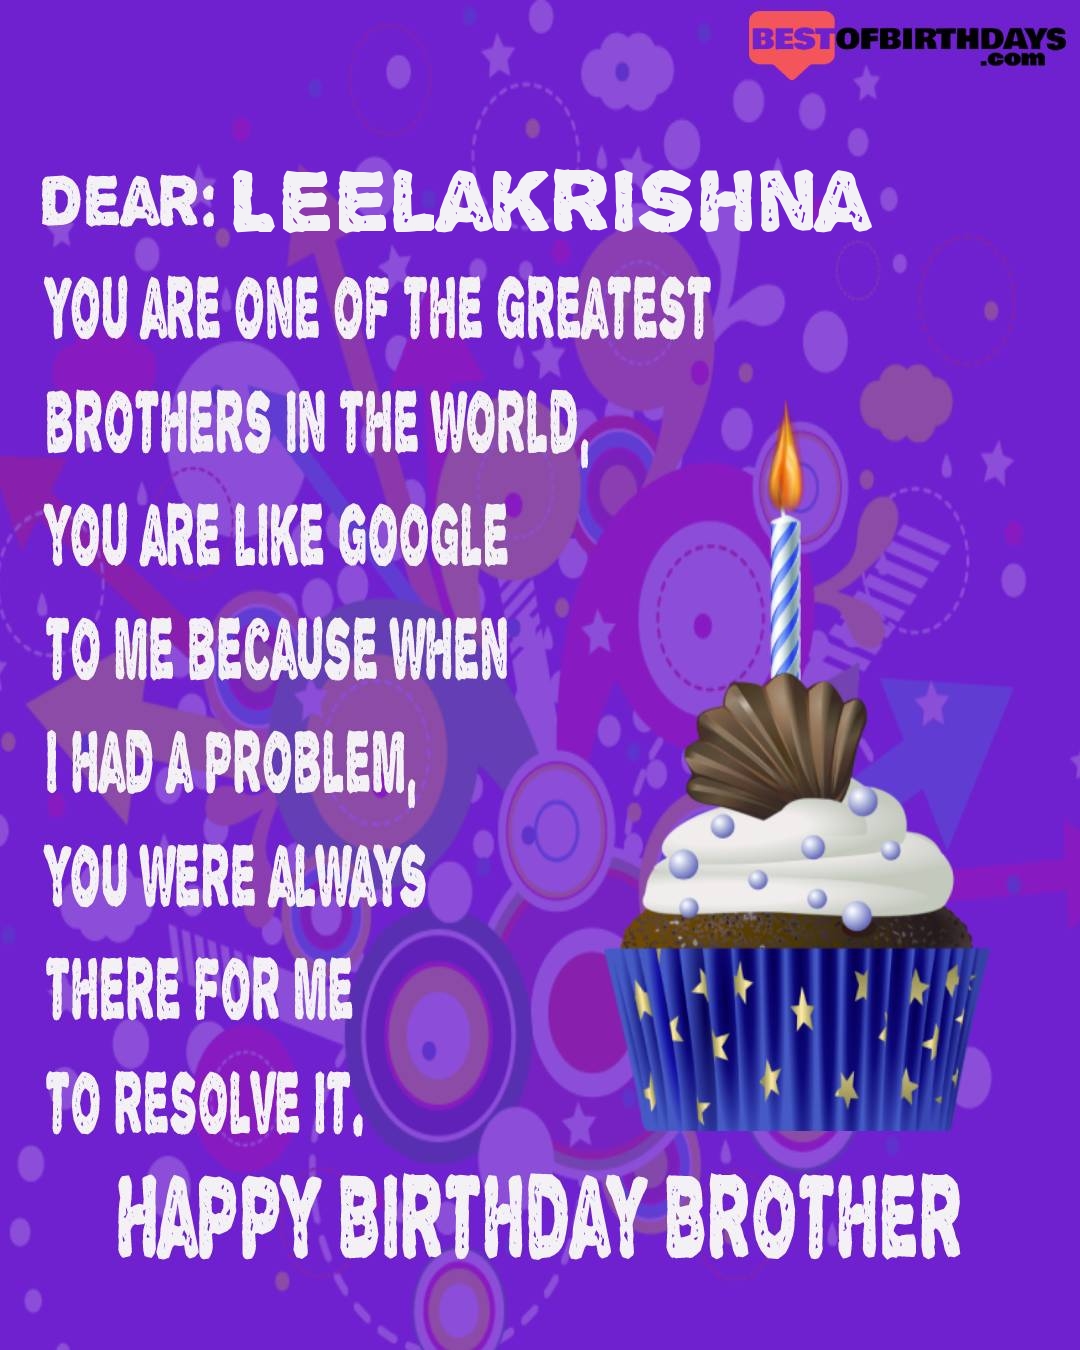 Happy birthday leelakrishna bhai brother bro